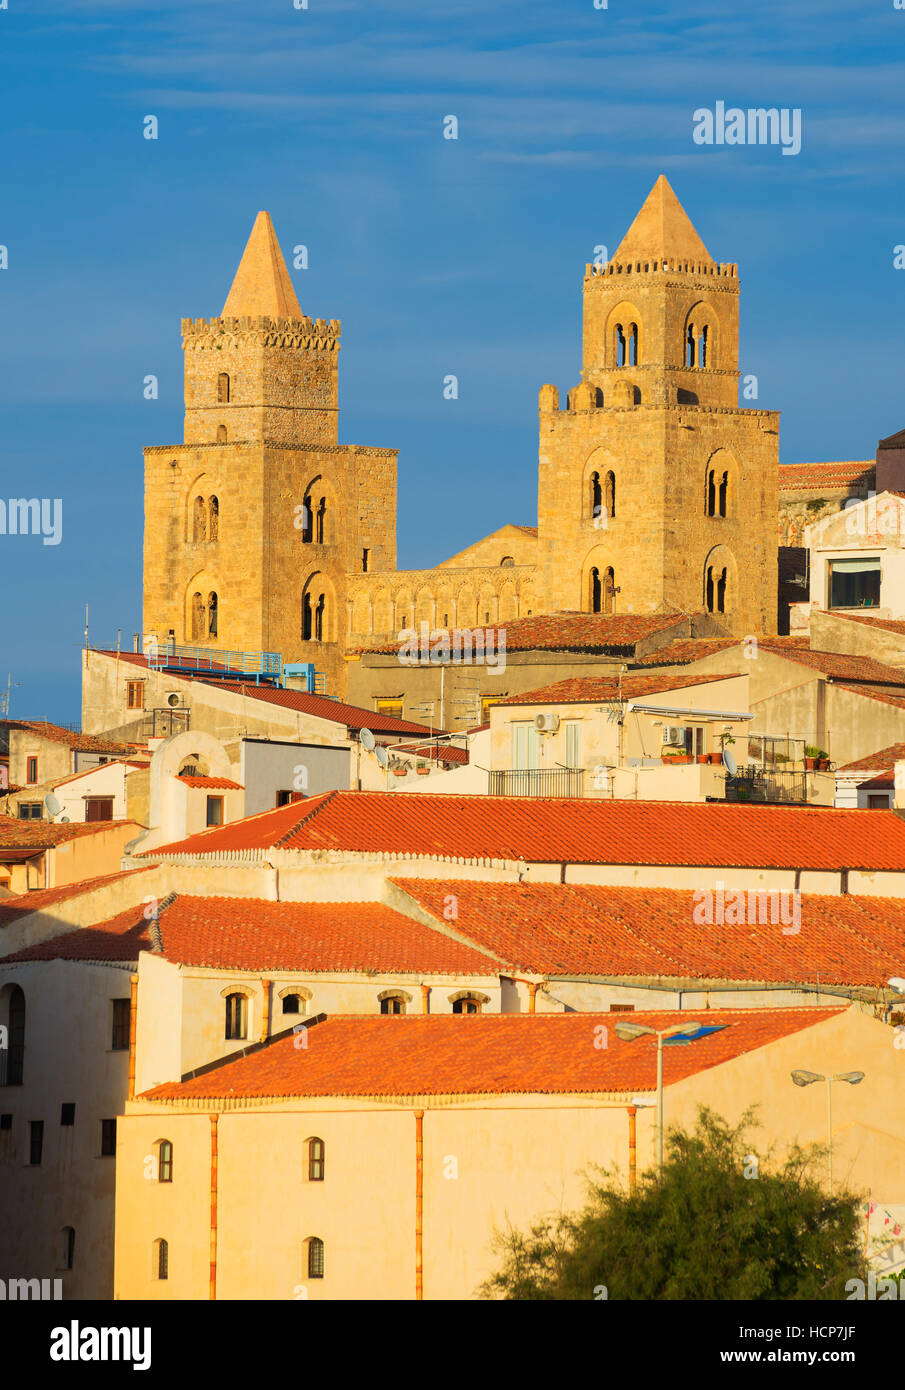 Santissimo Salvatore Cathedral, Cefalu, Sicily, Italy Stock Photo